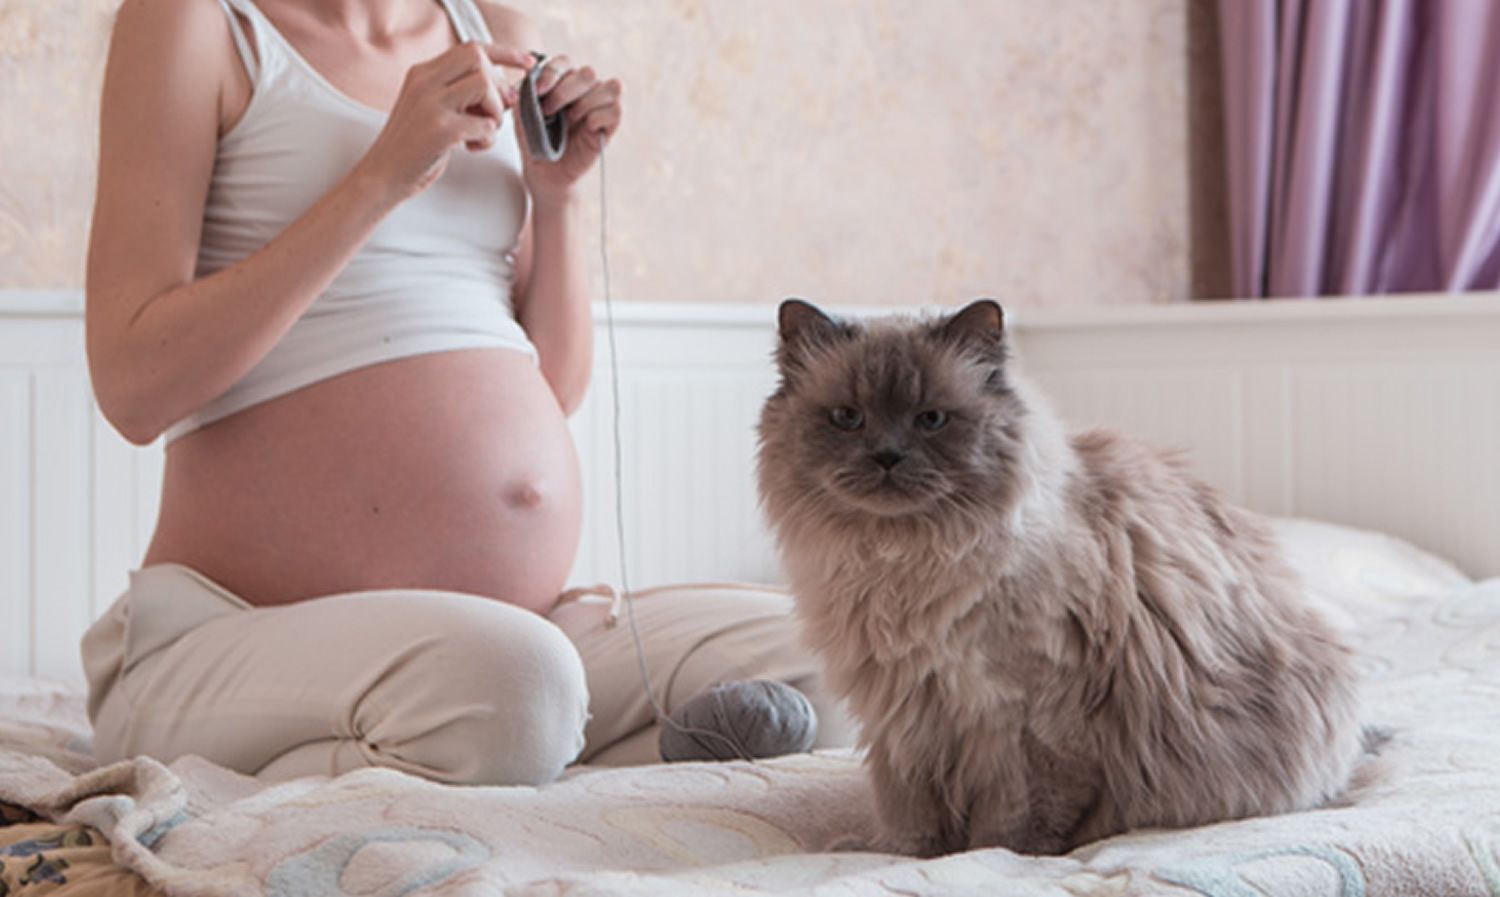 Bahaya Toksoplasma bagi Kehamilan serta Cara Mencegahnya